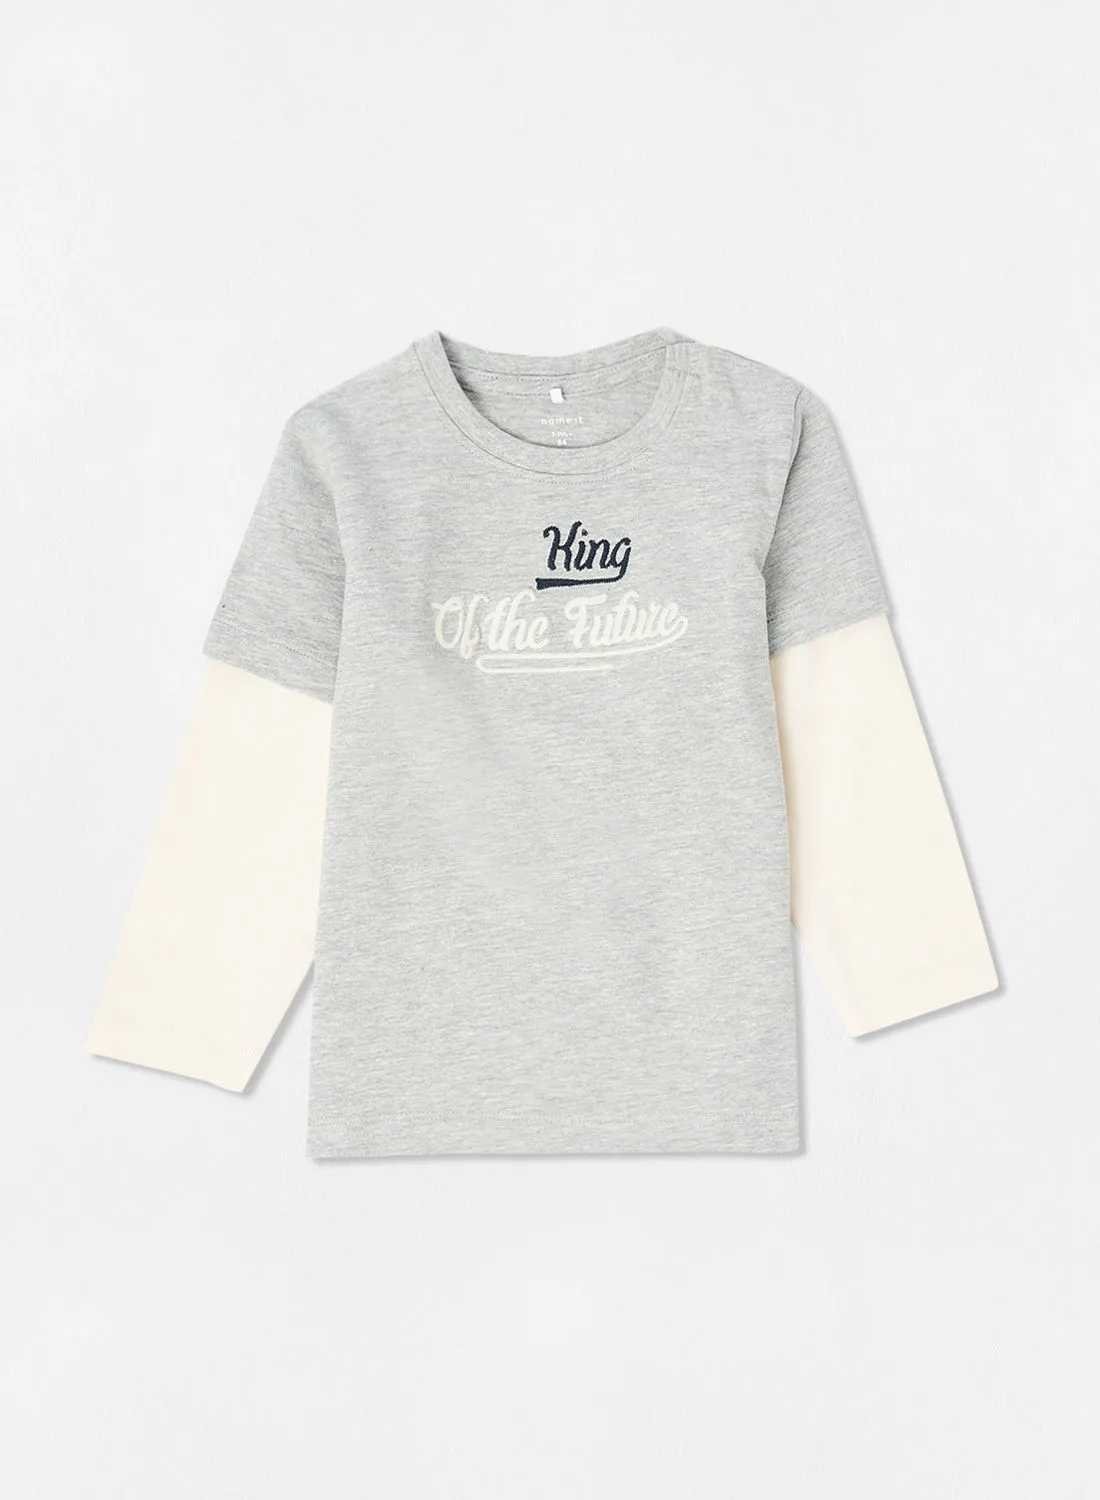 NAME IT Baby Slogan Print T-Shirt Grey